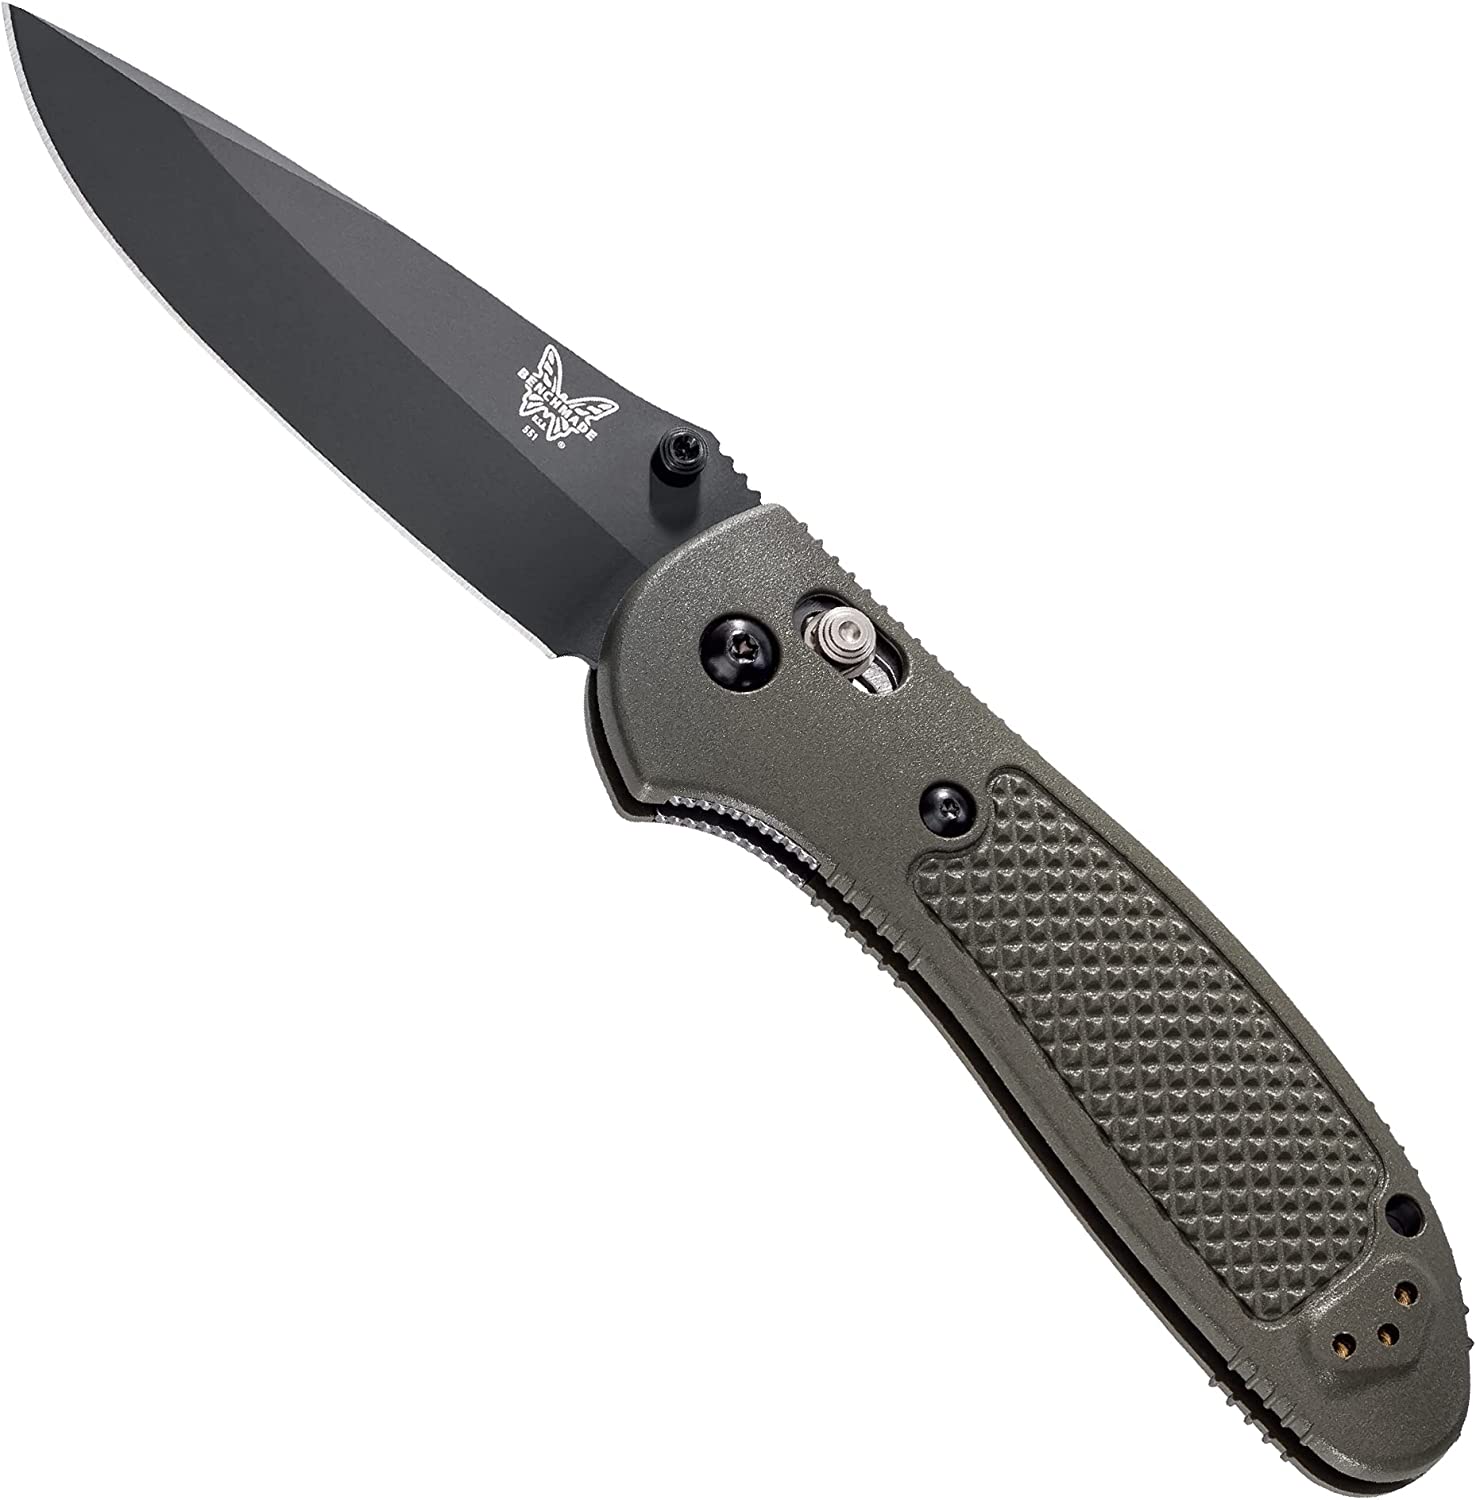 Benchmade – Griptilian 551 Knife with CPM-S30V Steel, Drop-Point Blade, Plain Edge, Coated Finish, Olive Handle (BKC556BKOD-S30V)